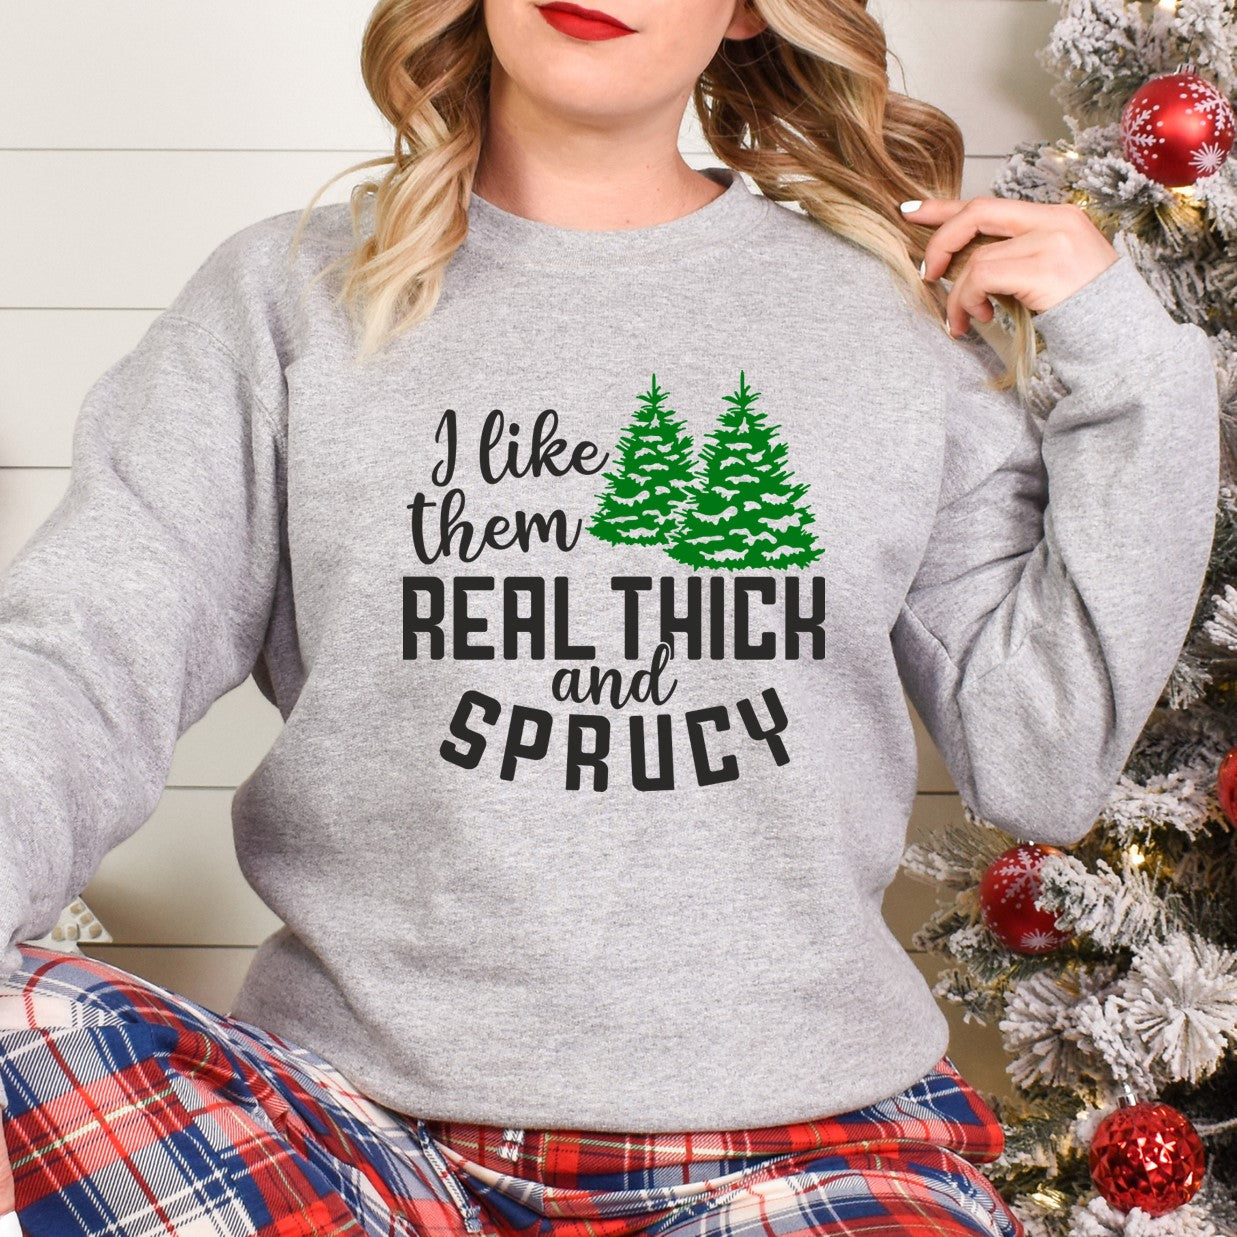 I like them Thick and Sprucy - Crewneck Sweatshirt